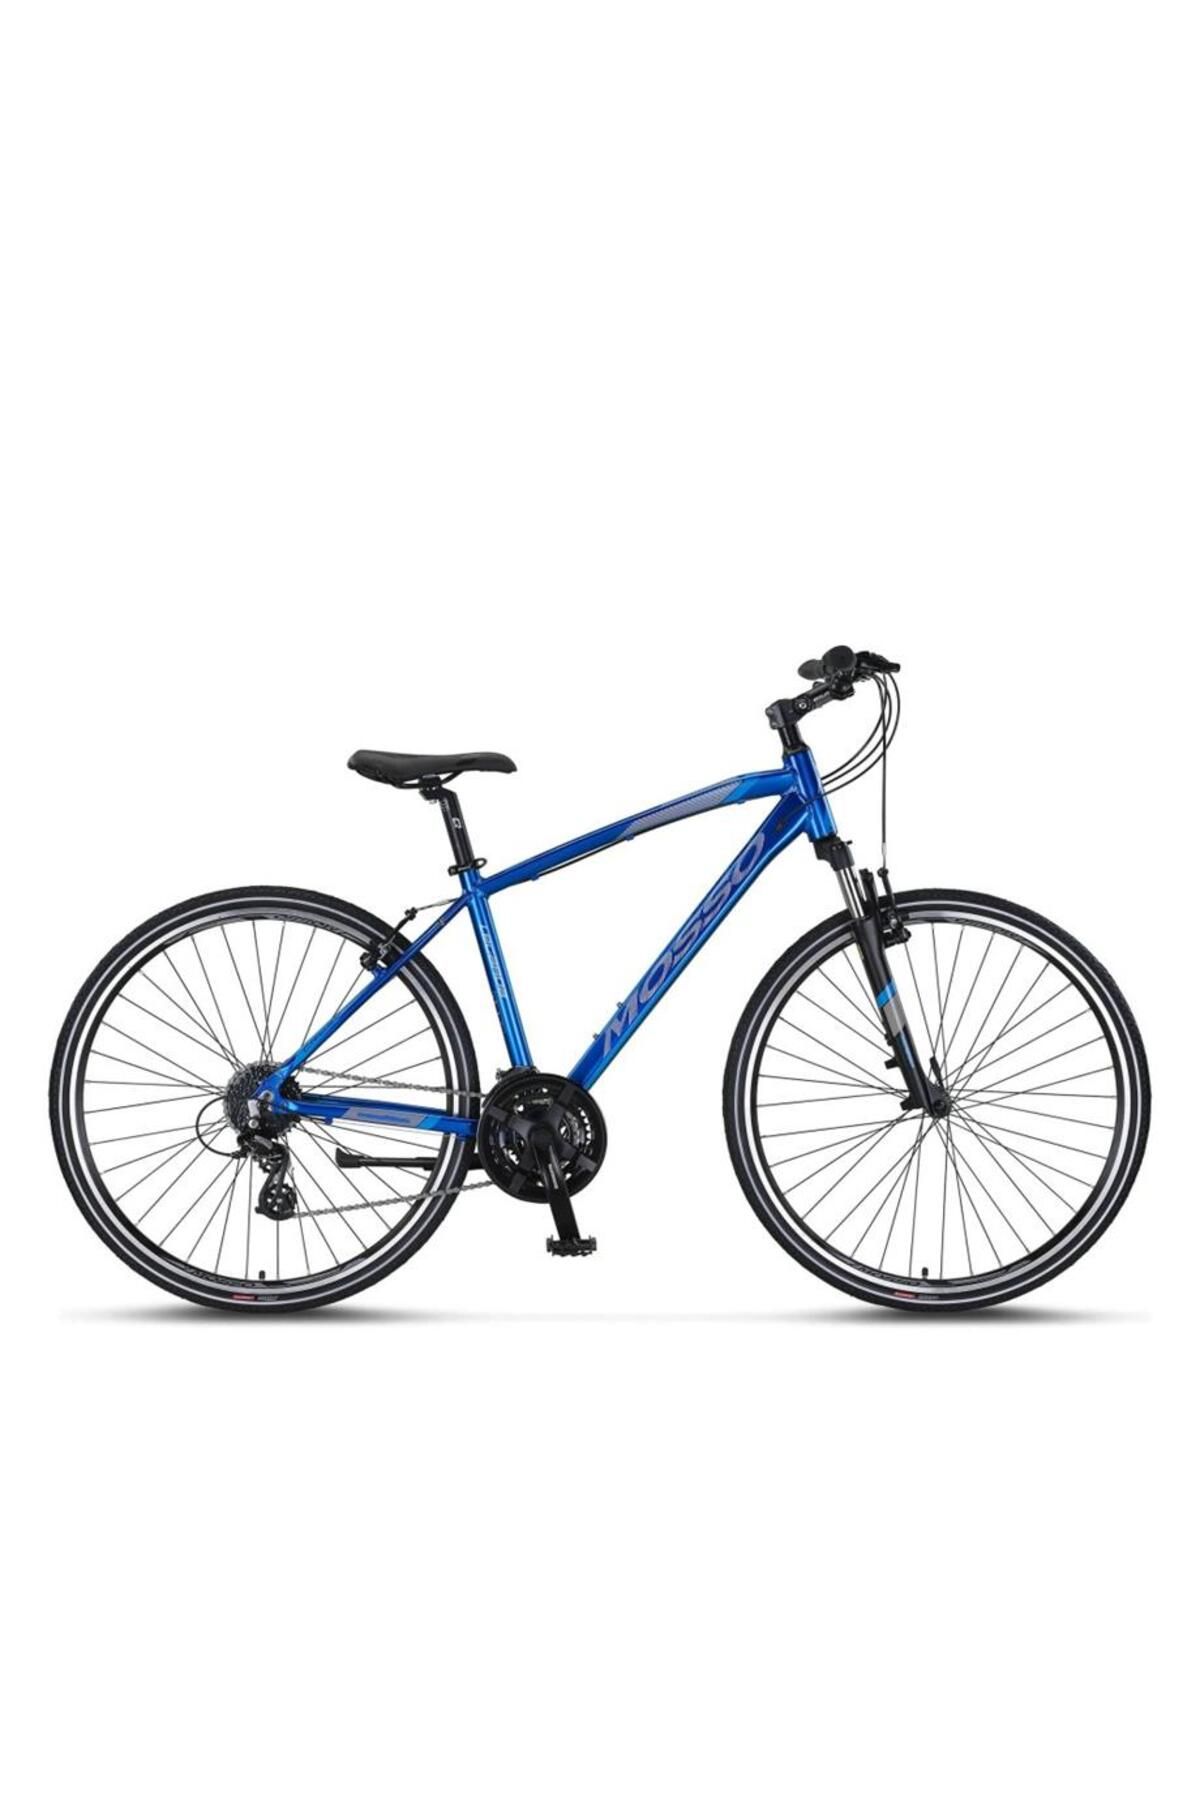 Mosso Legarda-2324-msm-v Erkek Şehir Bisikleti 460h 28 Jant 24 Vites Lacivert Mavi